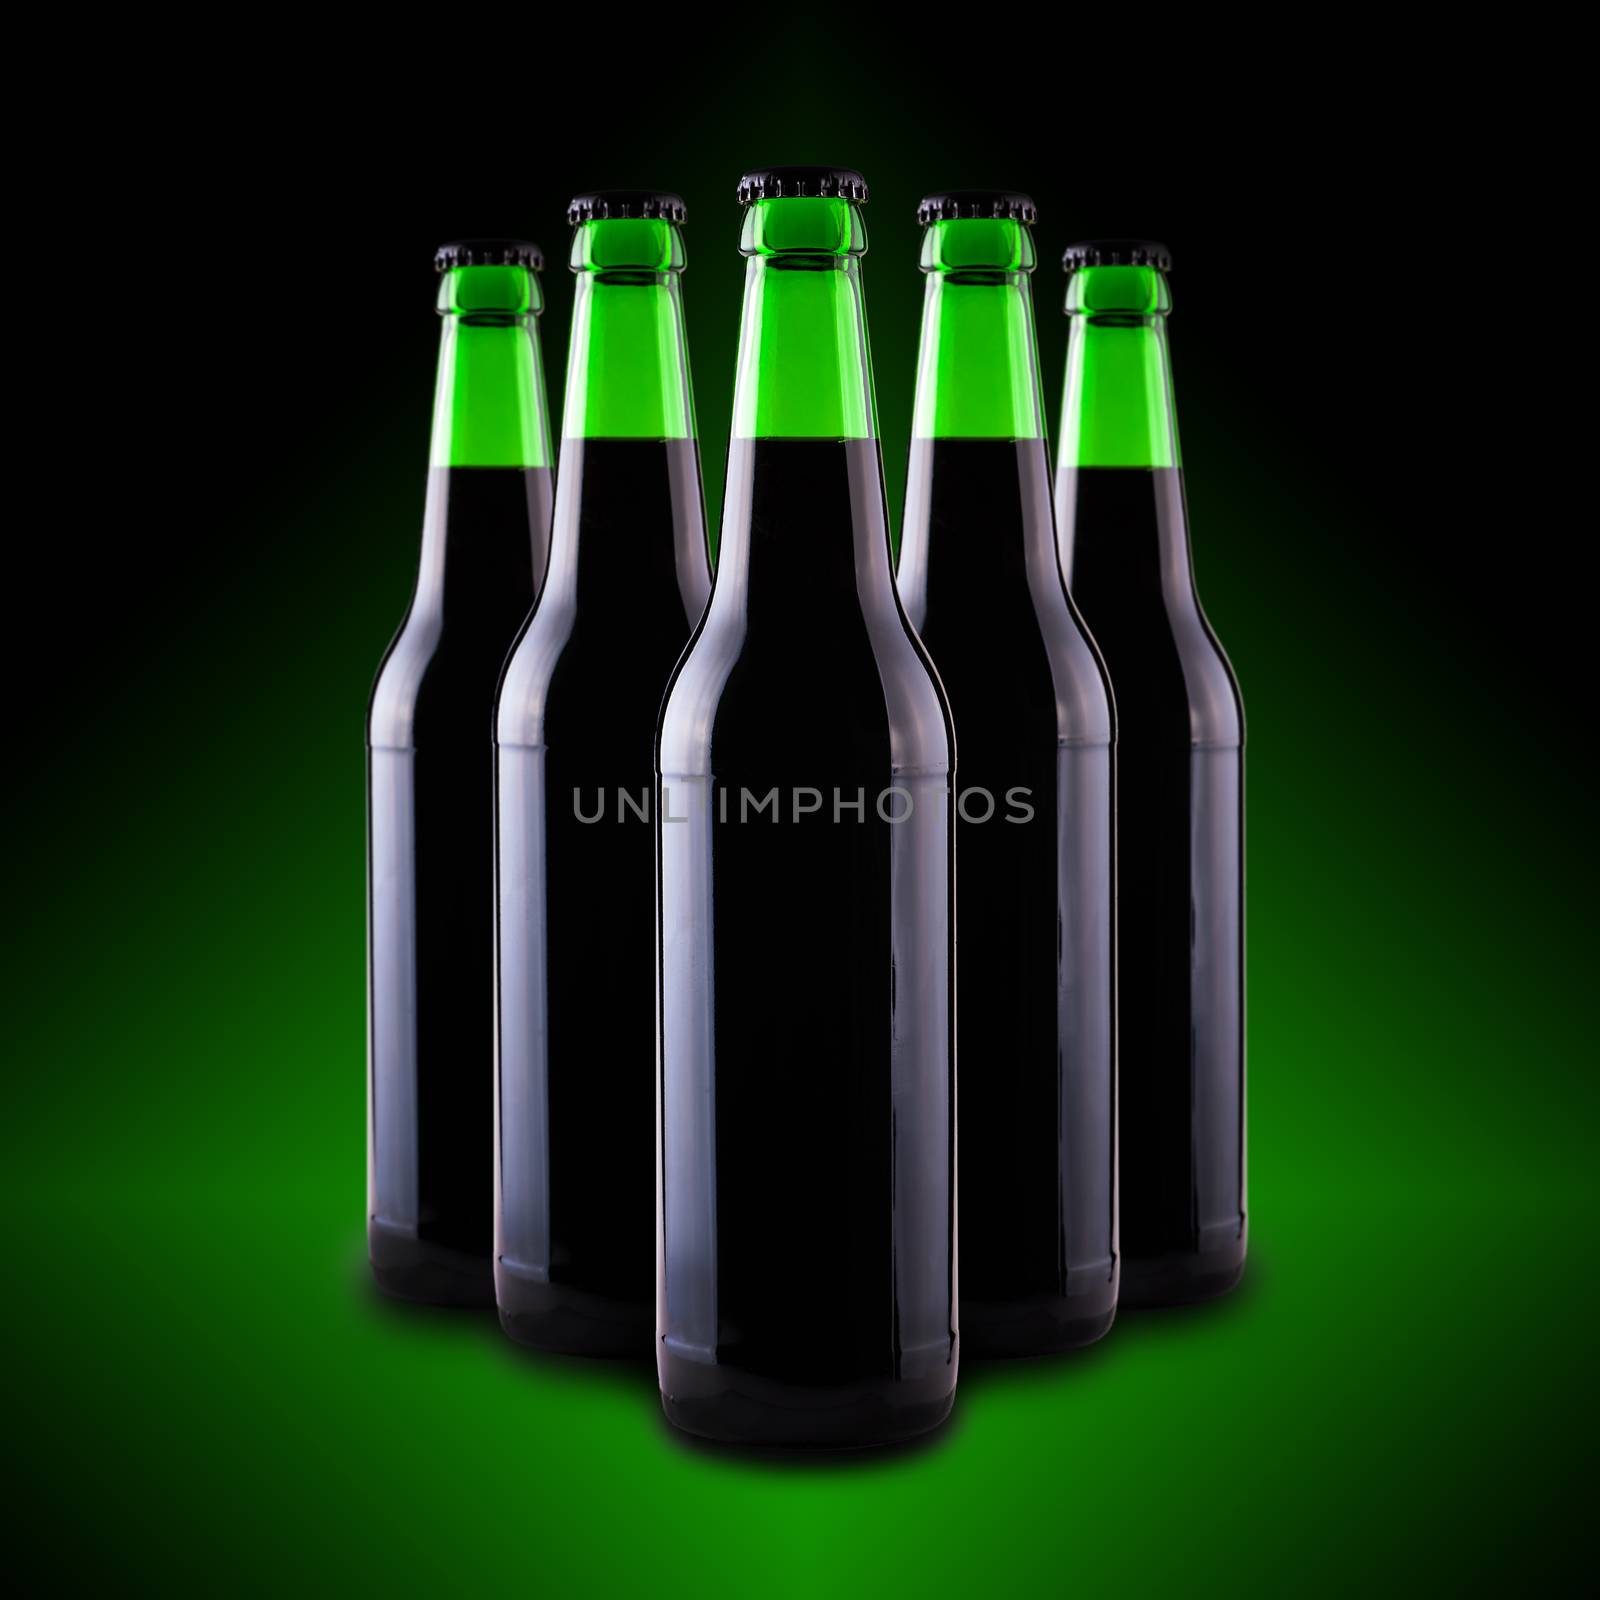 beer in glass bottles by MegaArt